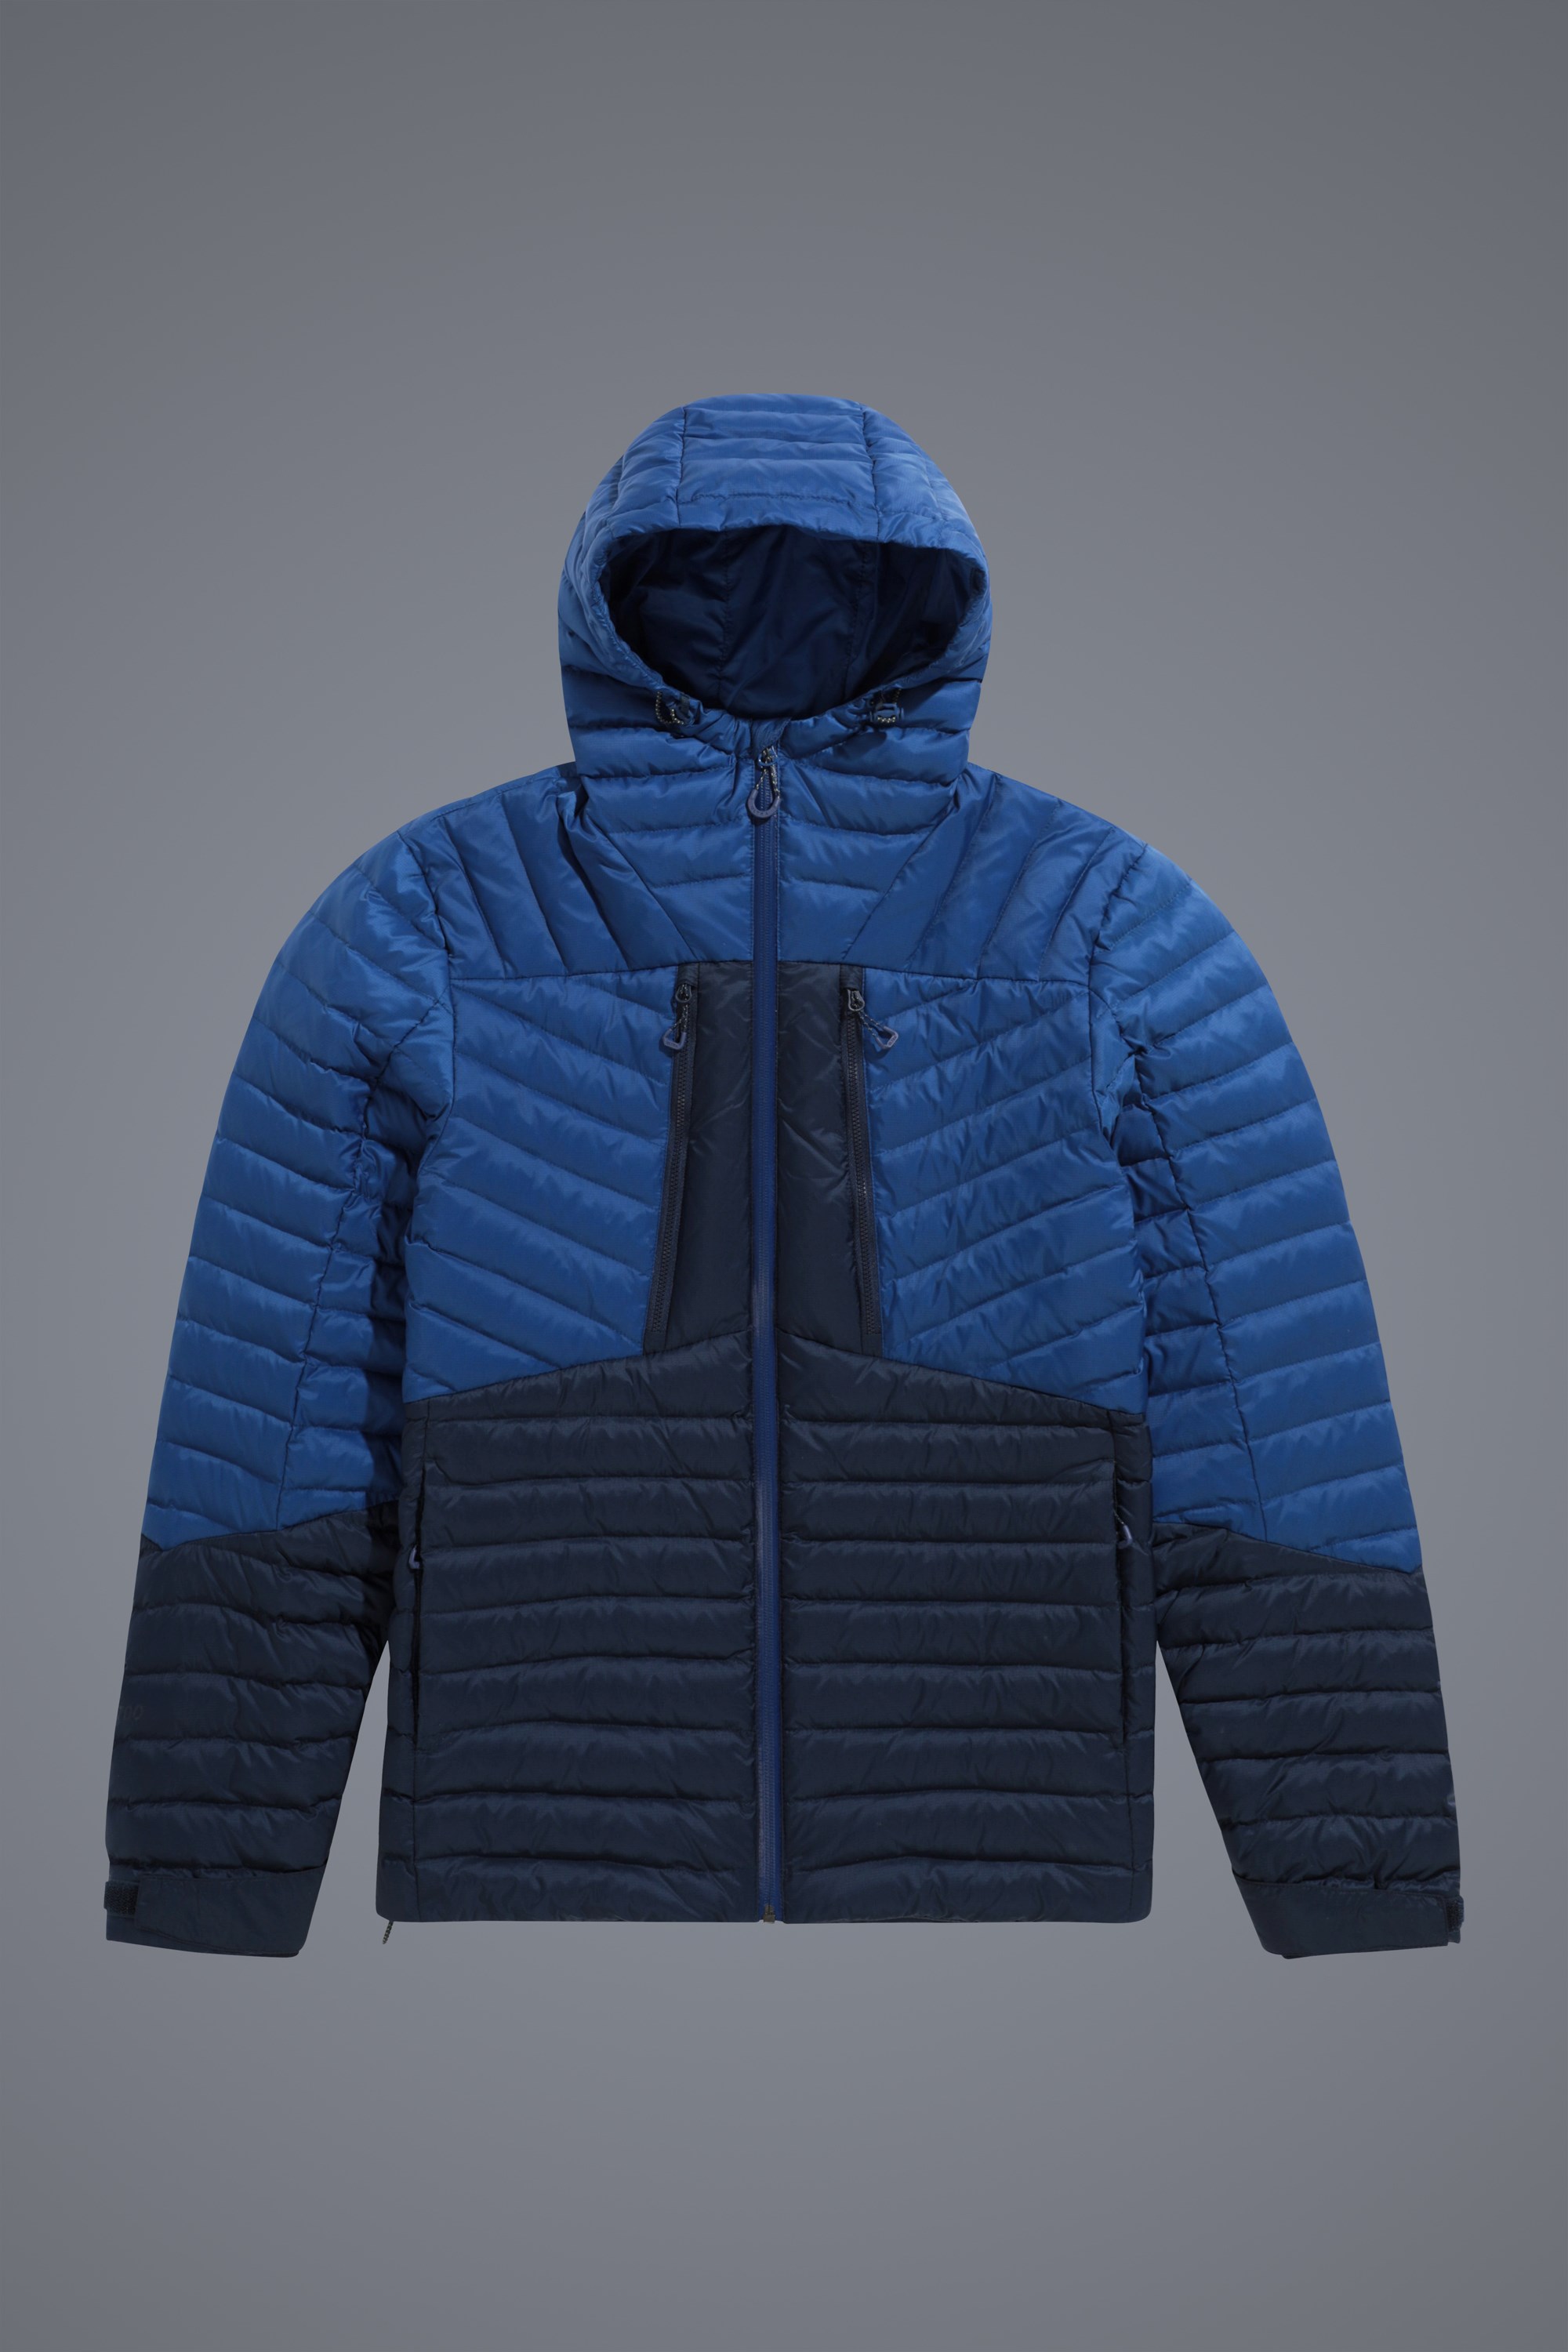 Manta Mens Sherpa Lined Insulated Jacket